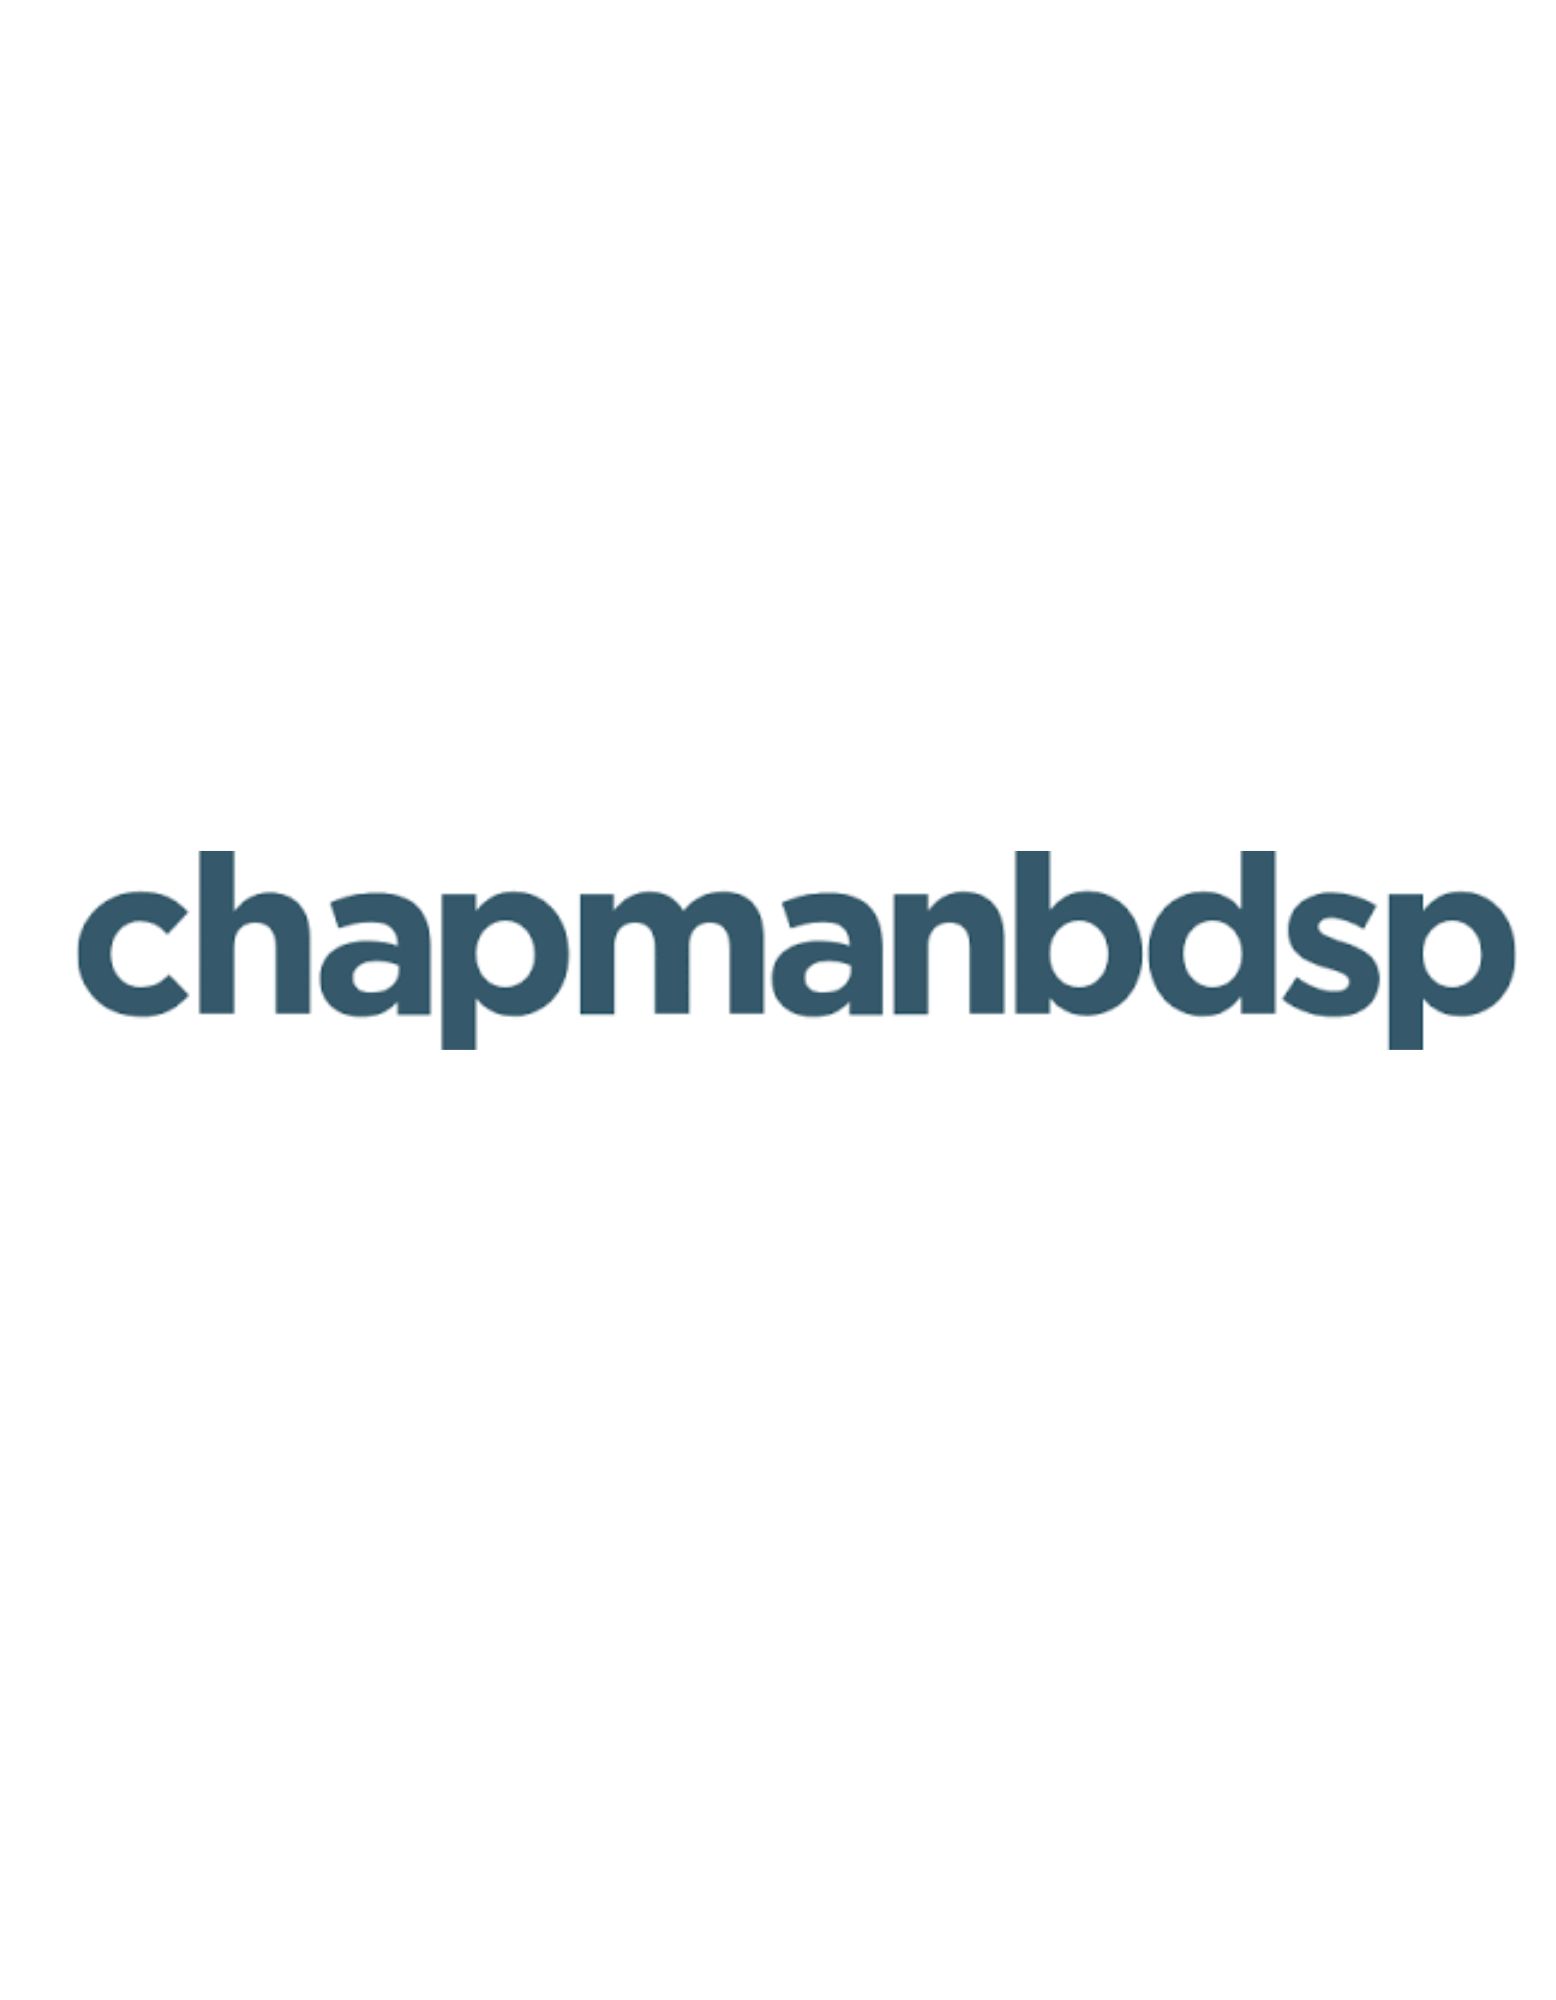  HR Director at Chapman BDSP